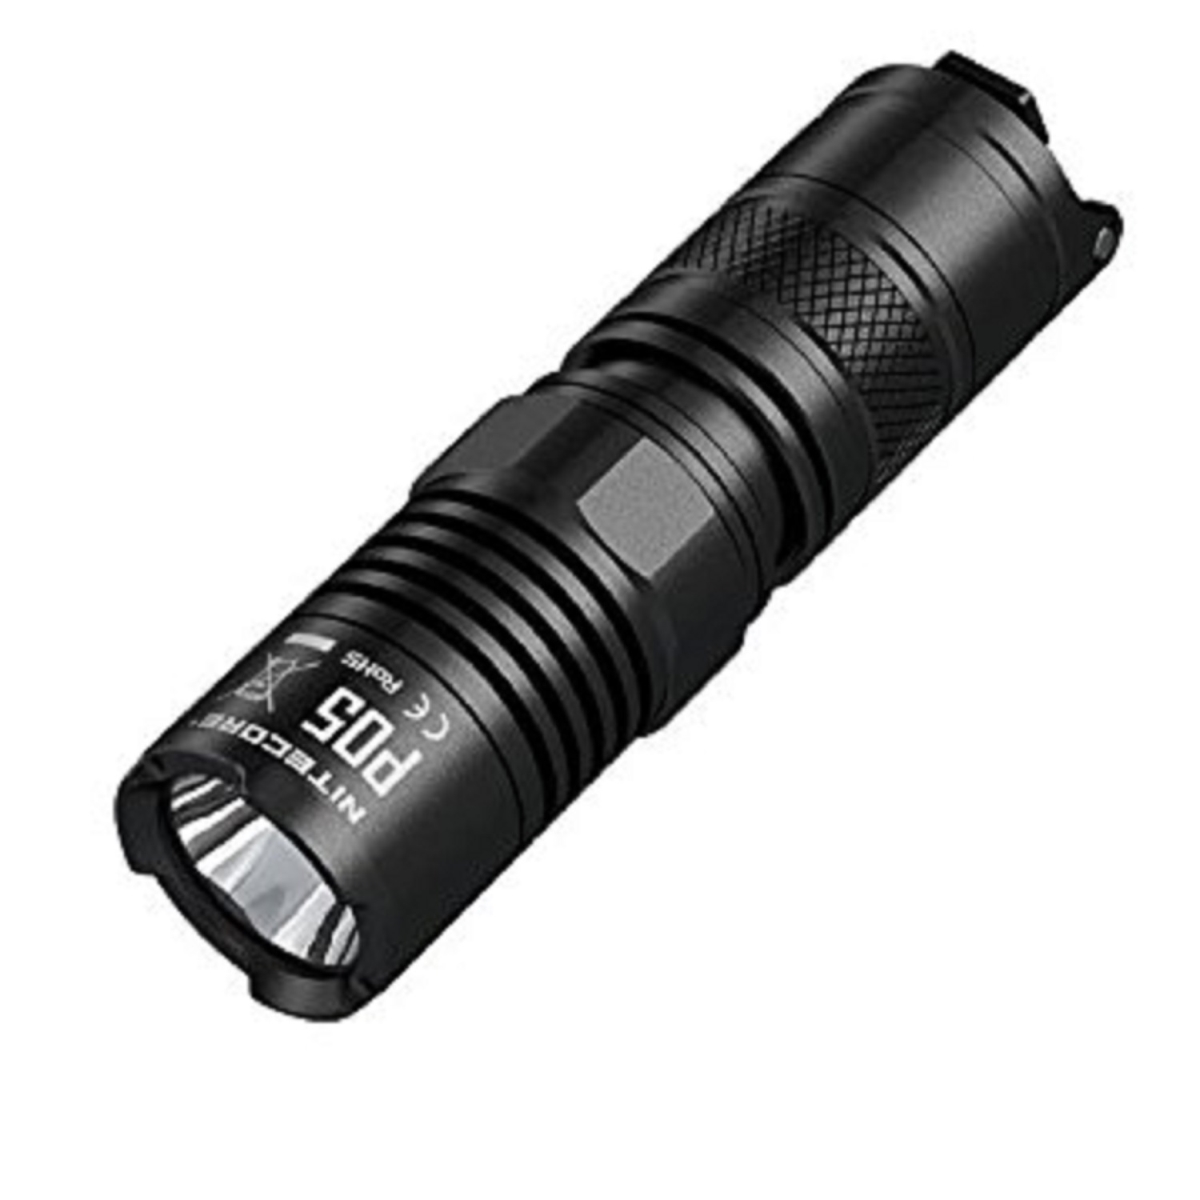 Nitecore Sysmax Industrial 9004732 460 Lumen Compact Led Self-defense Flashlight - Black